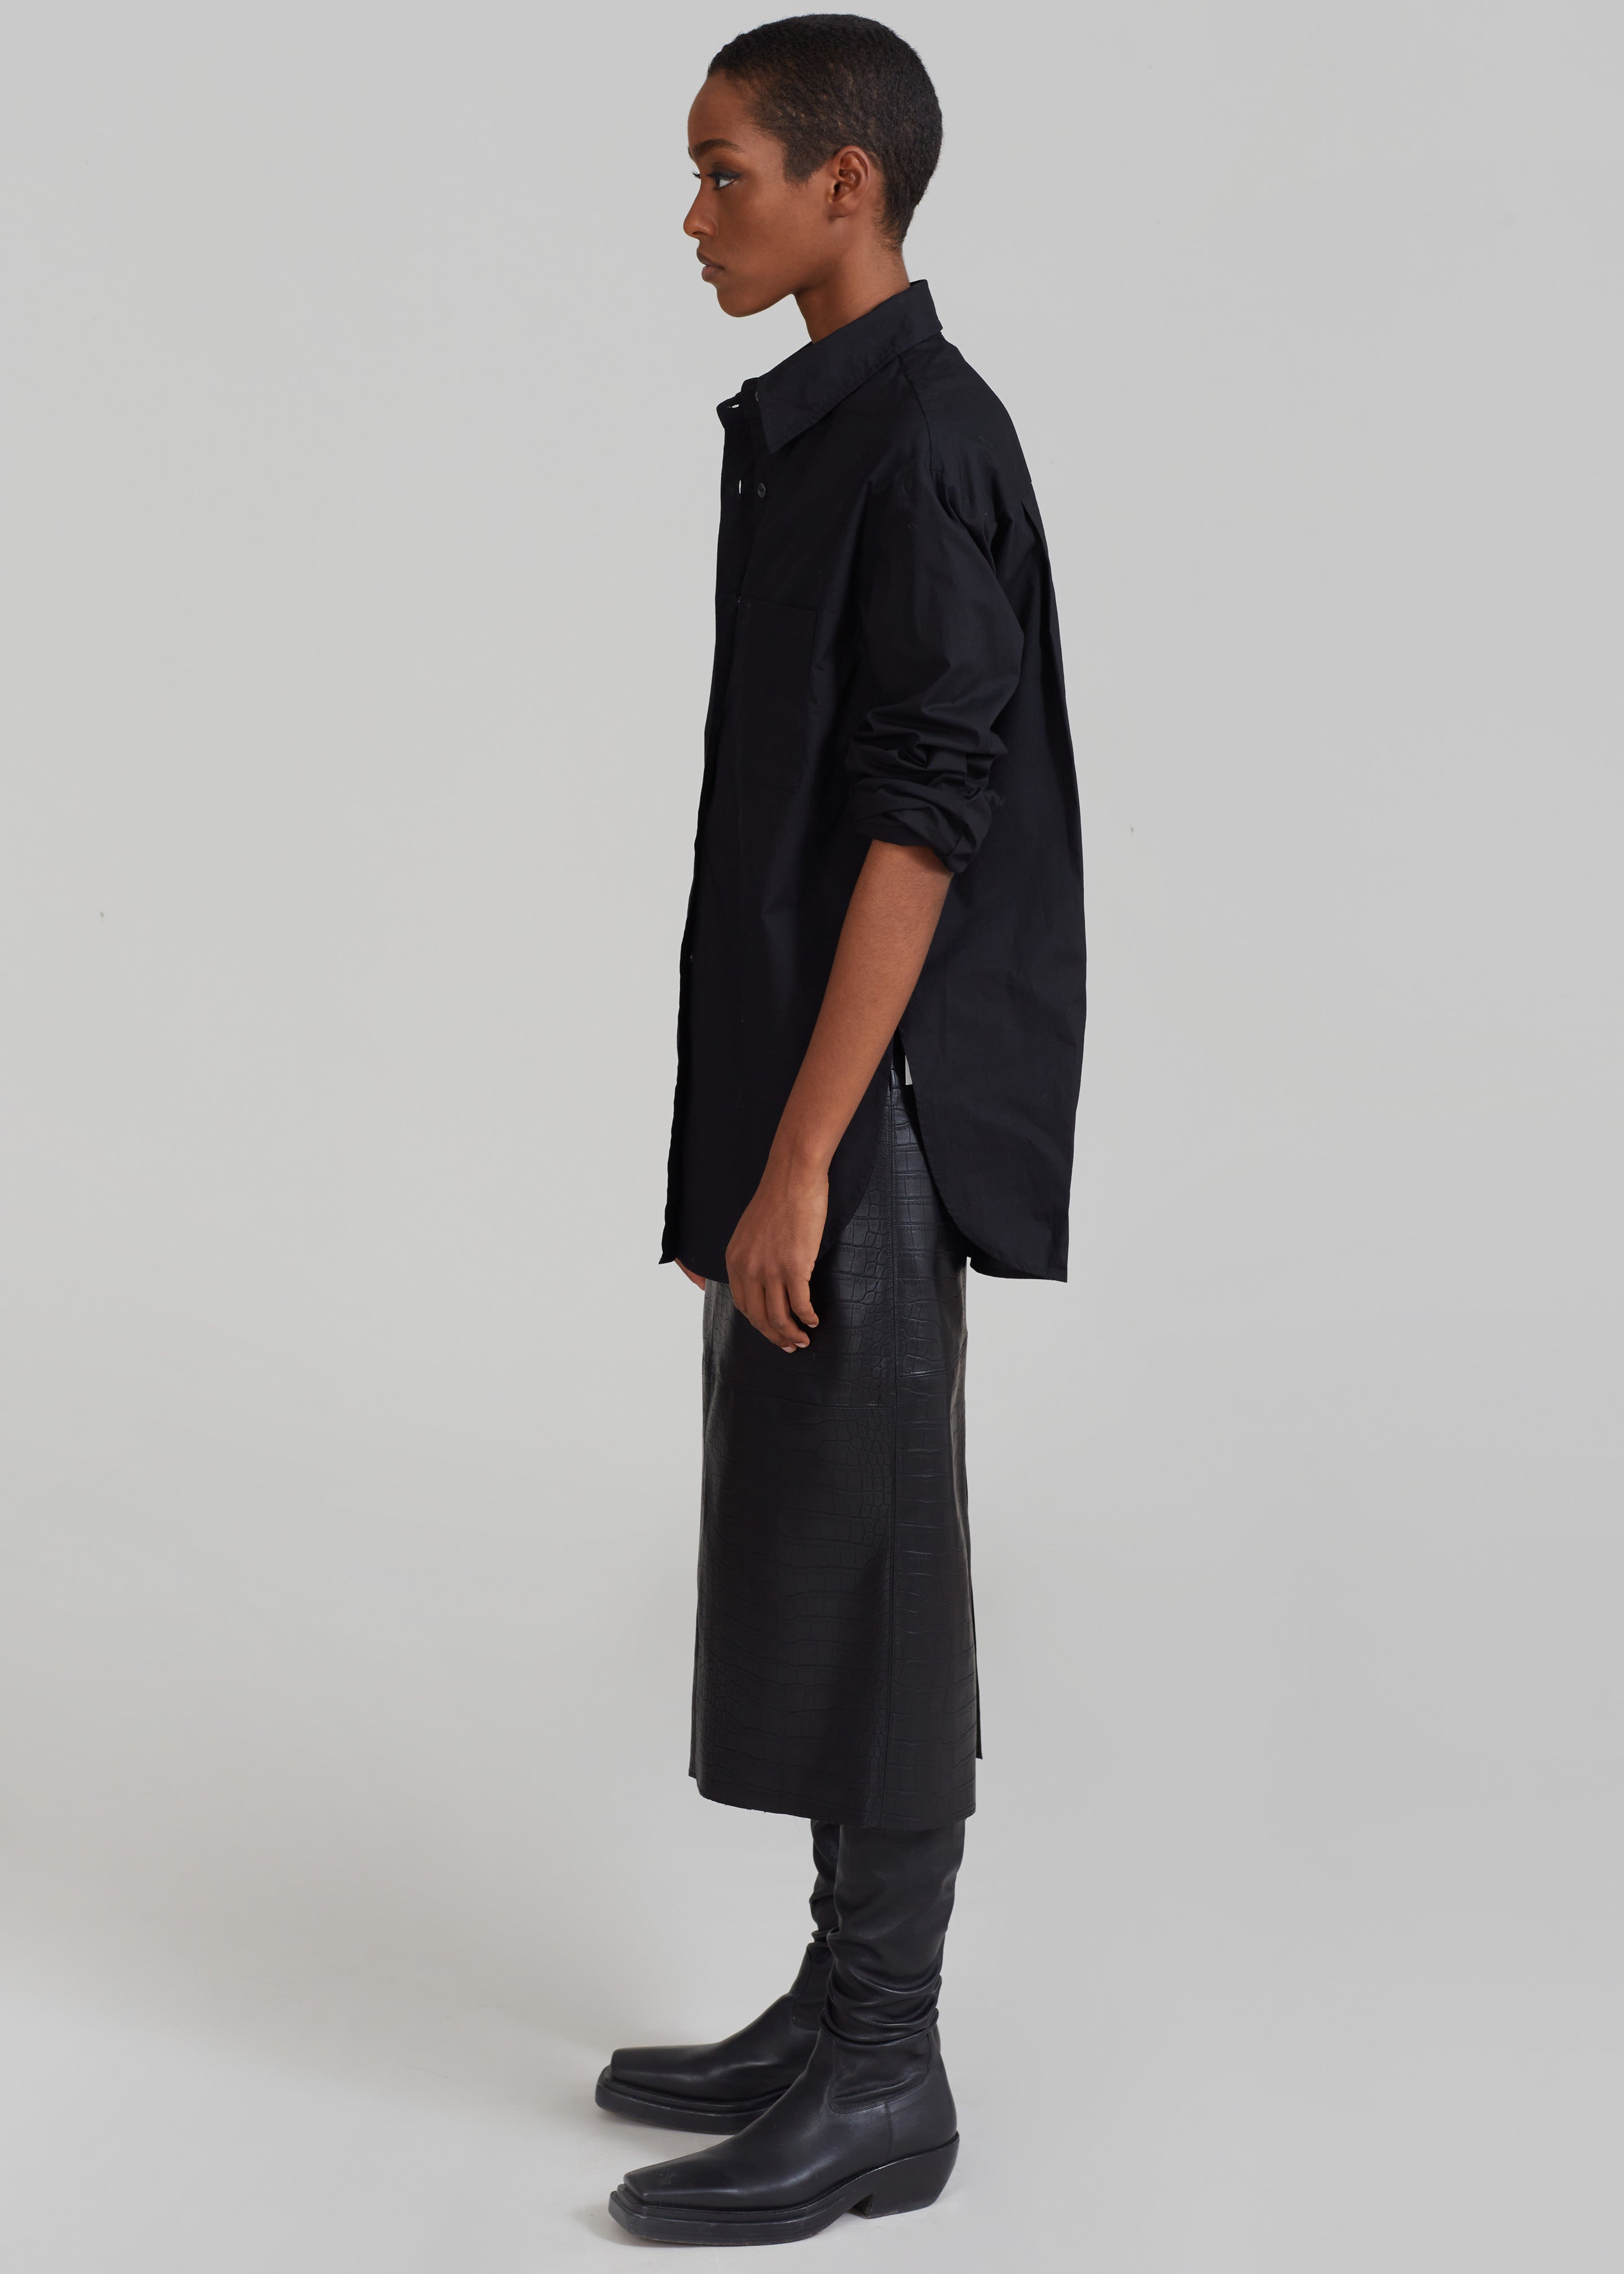 Shop Louis Vuitton Undershirts & Socks by KAFRA